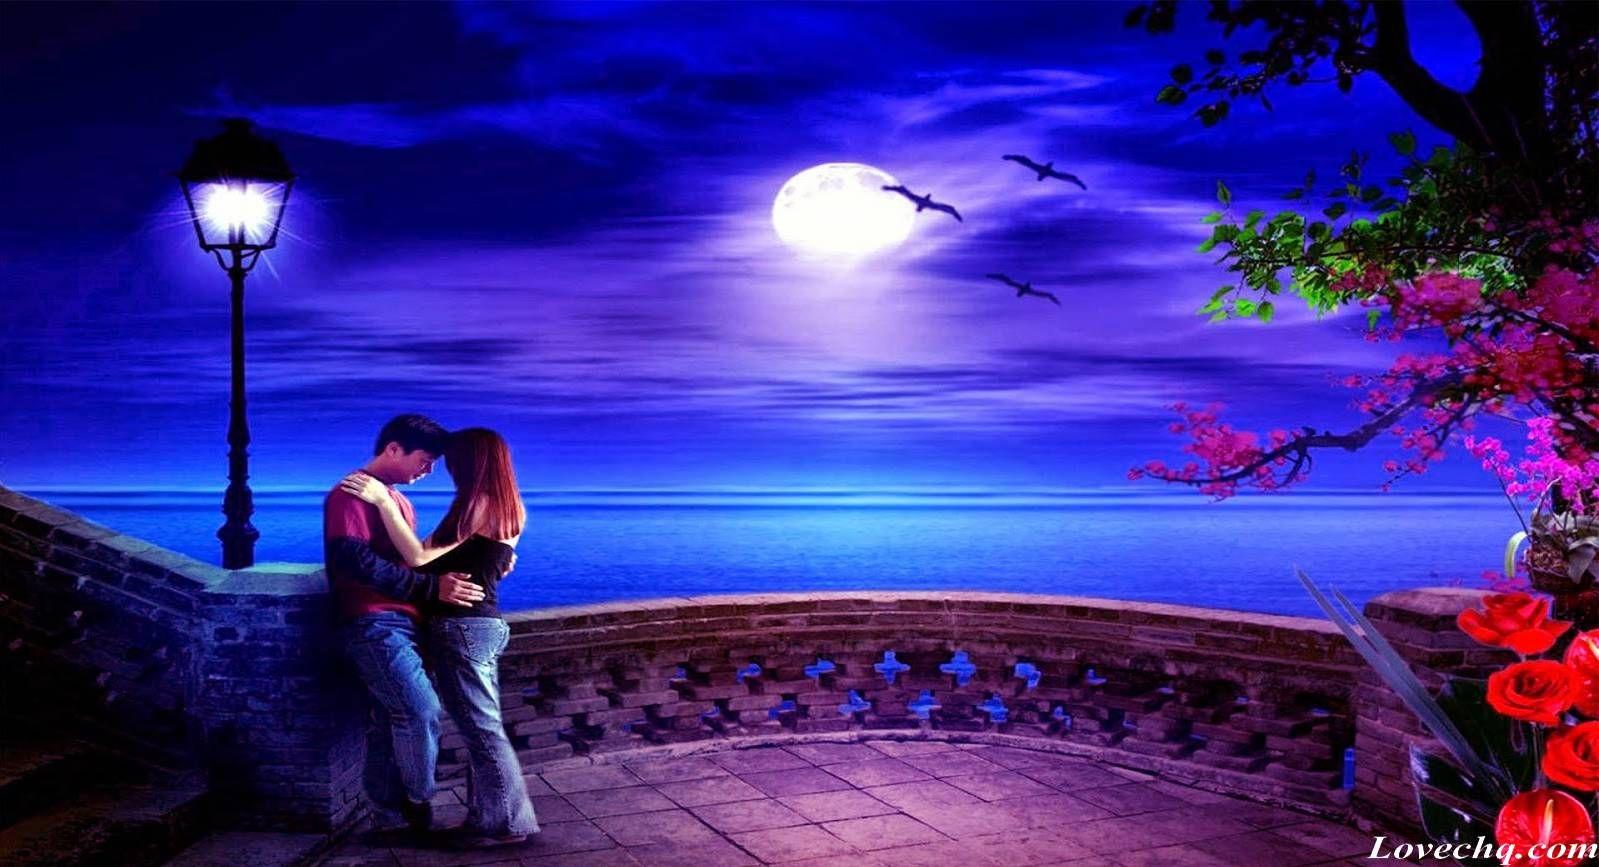 Romantic Good Night wallpaper Free Download HD Walls 1599